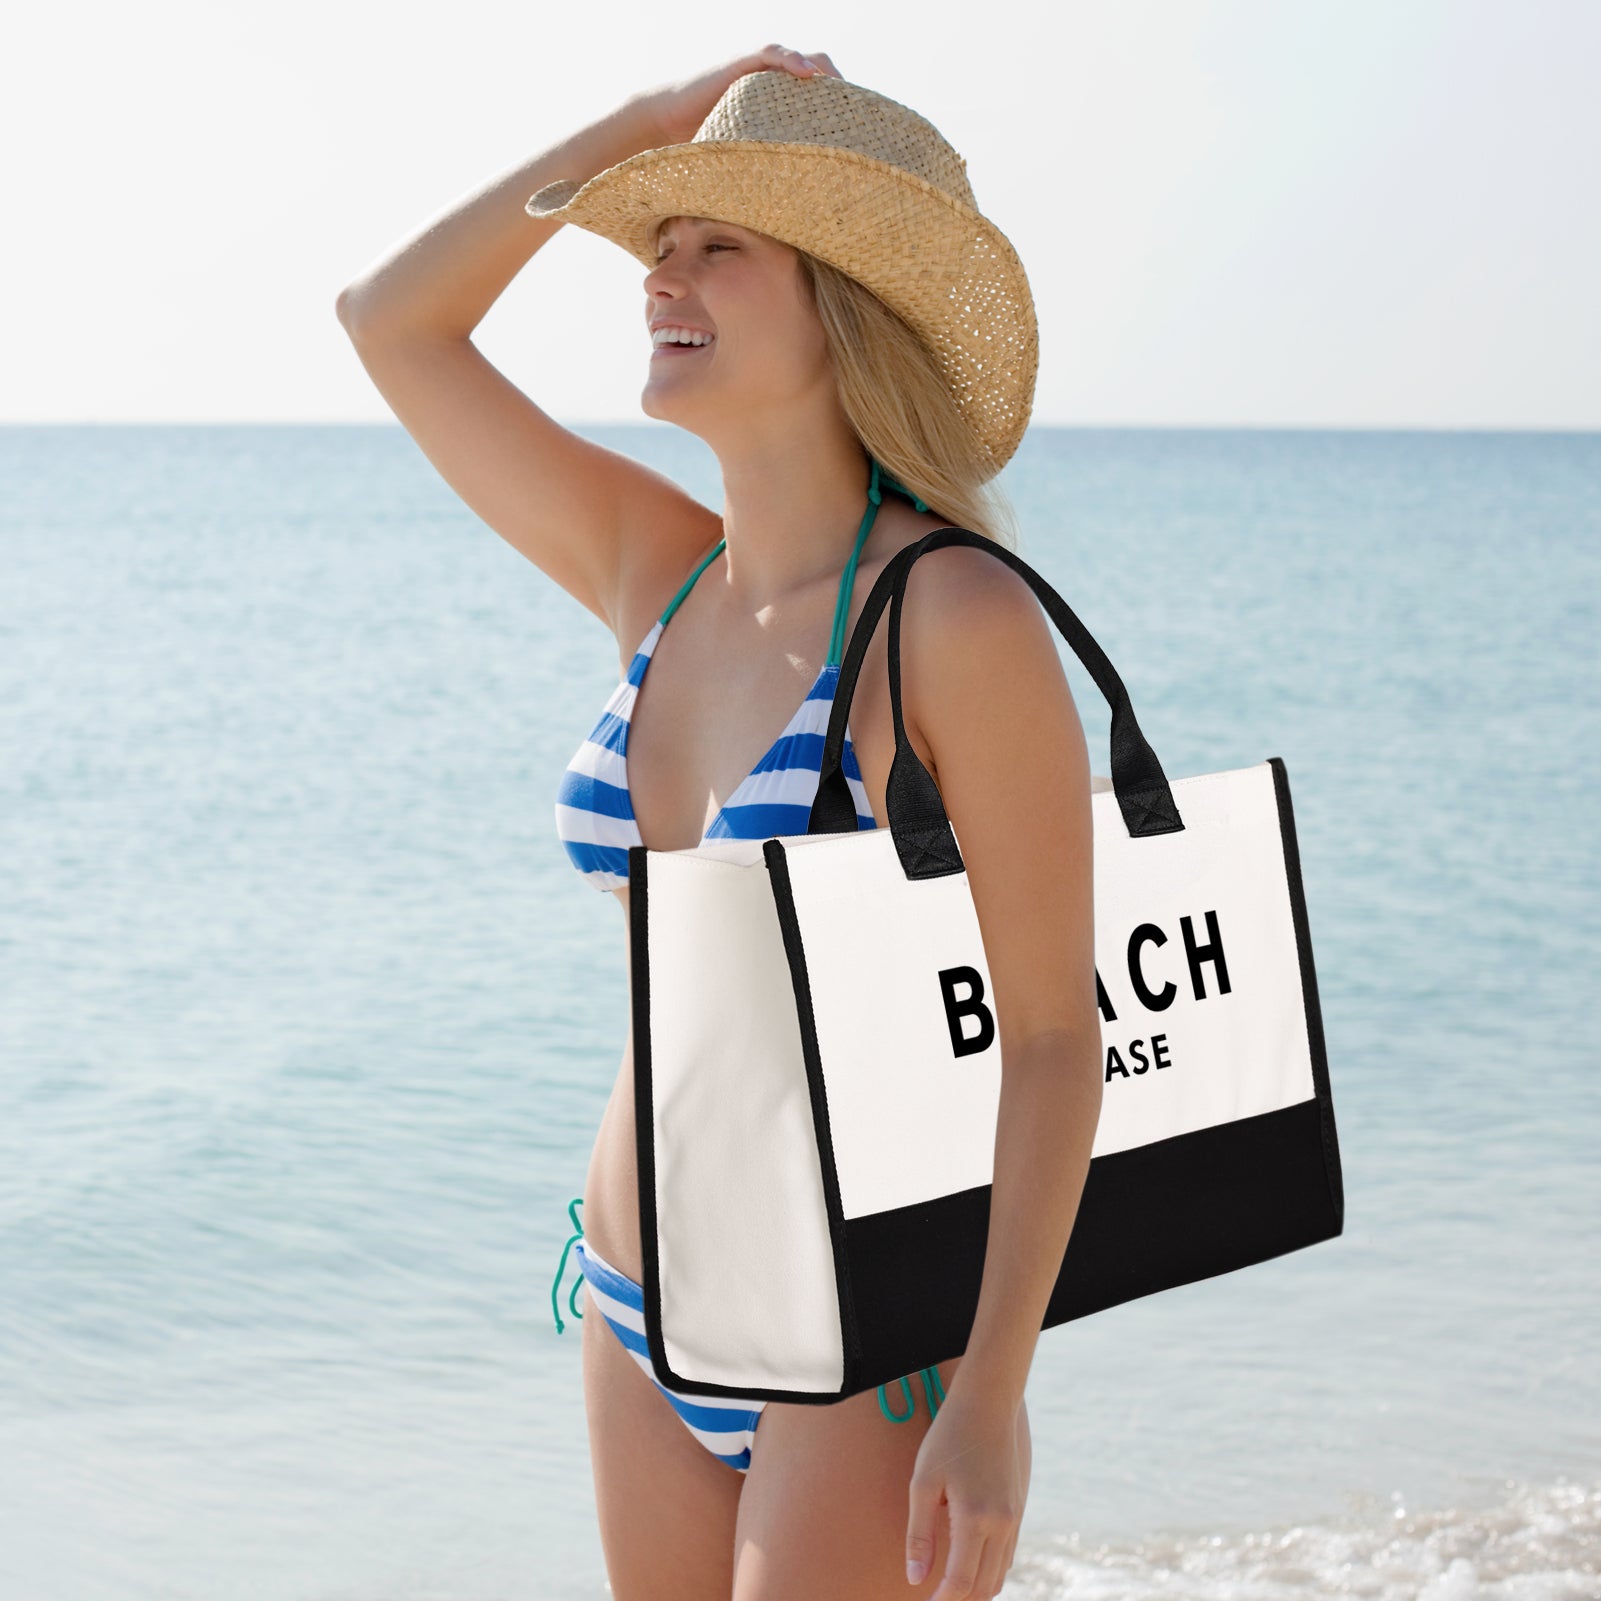 Beach Vibes 100% Waterproof Beach Bag